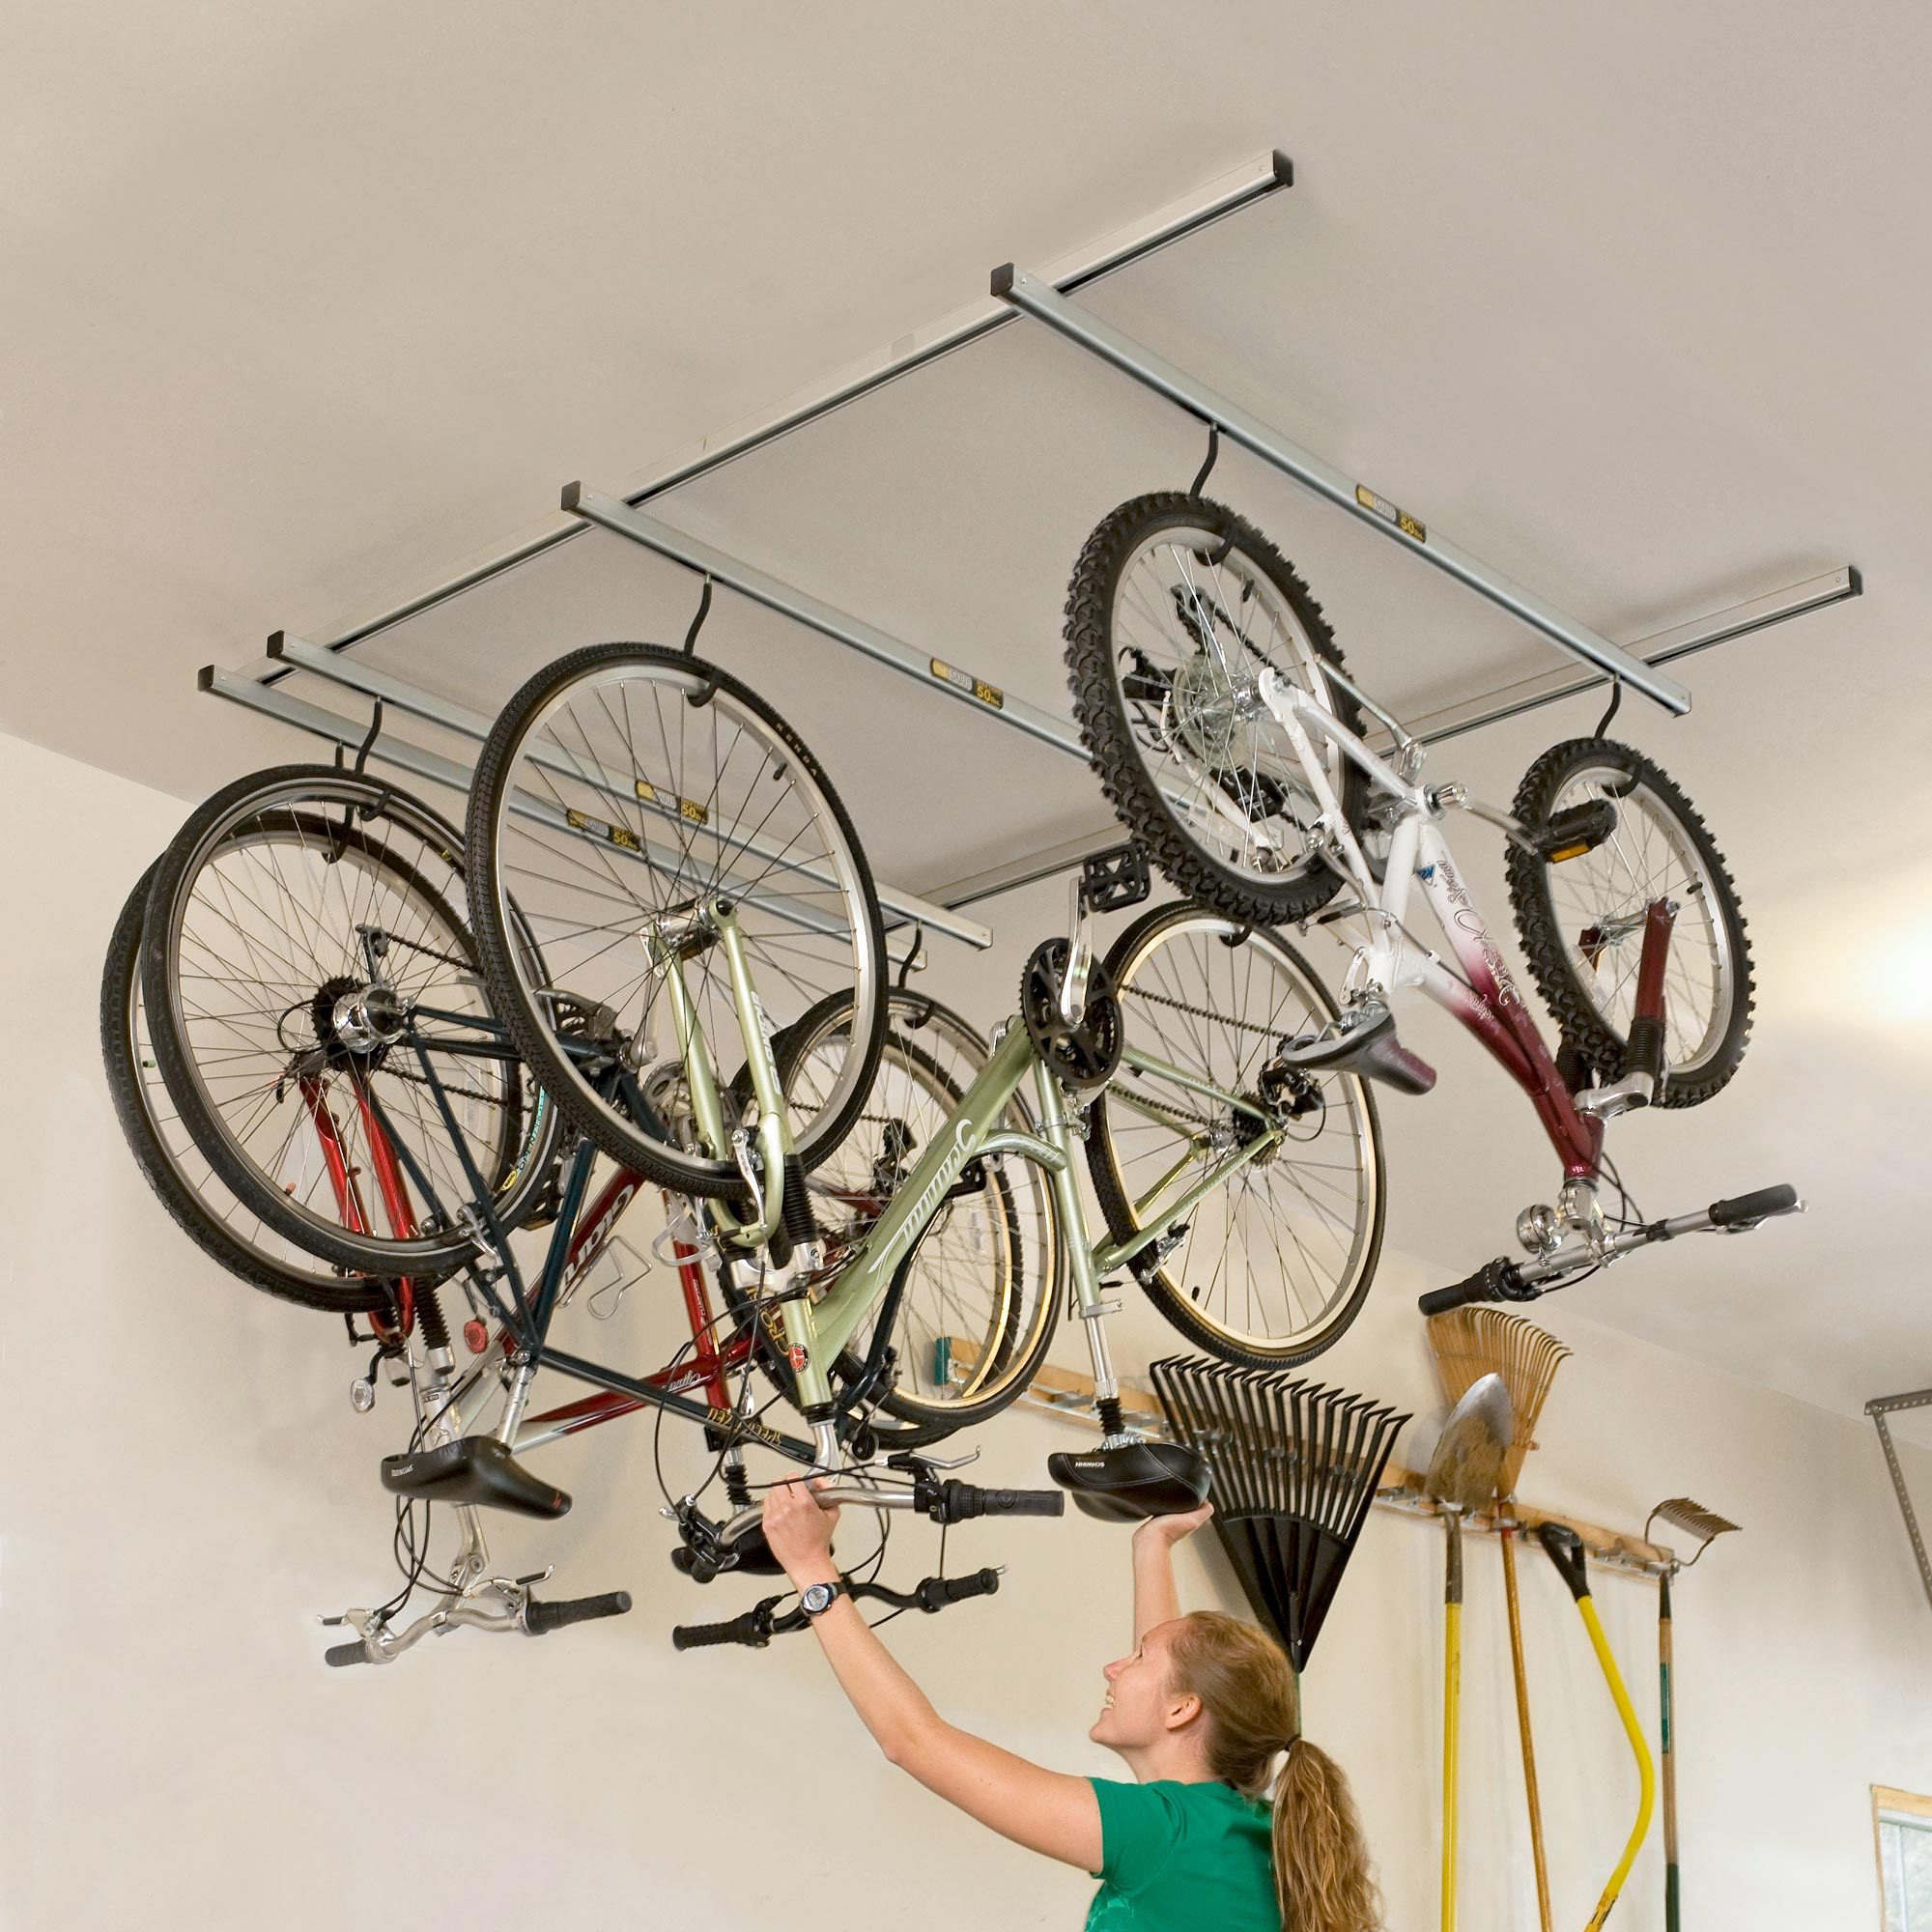 Overhead Bike Storage Saris Cycle Glide System